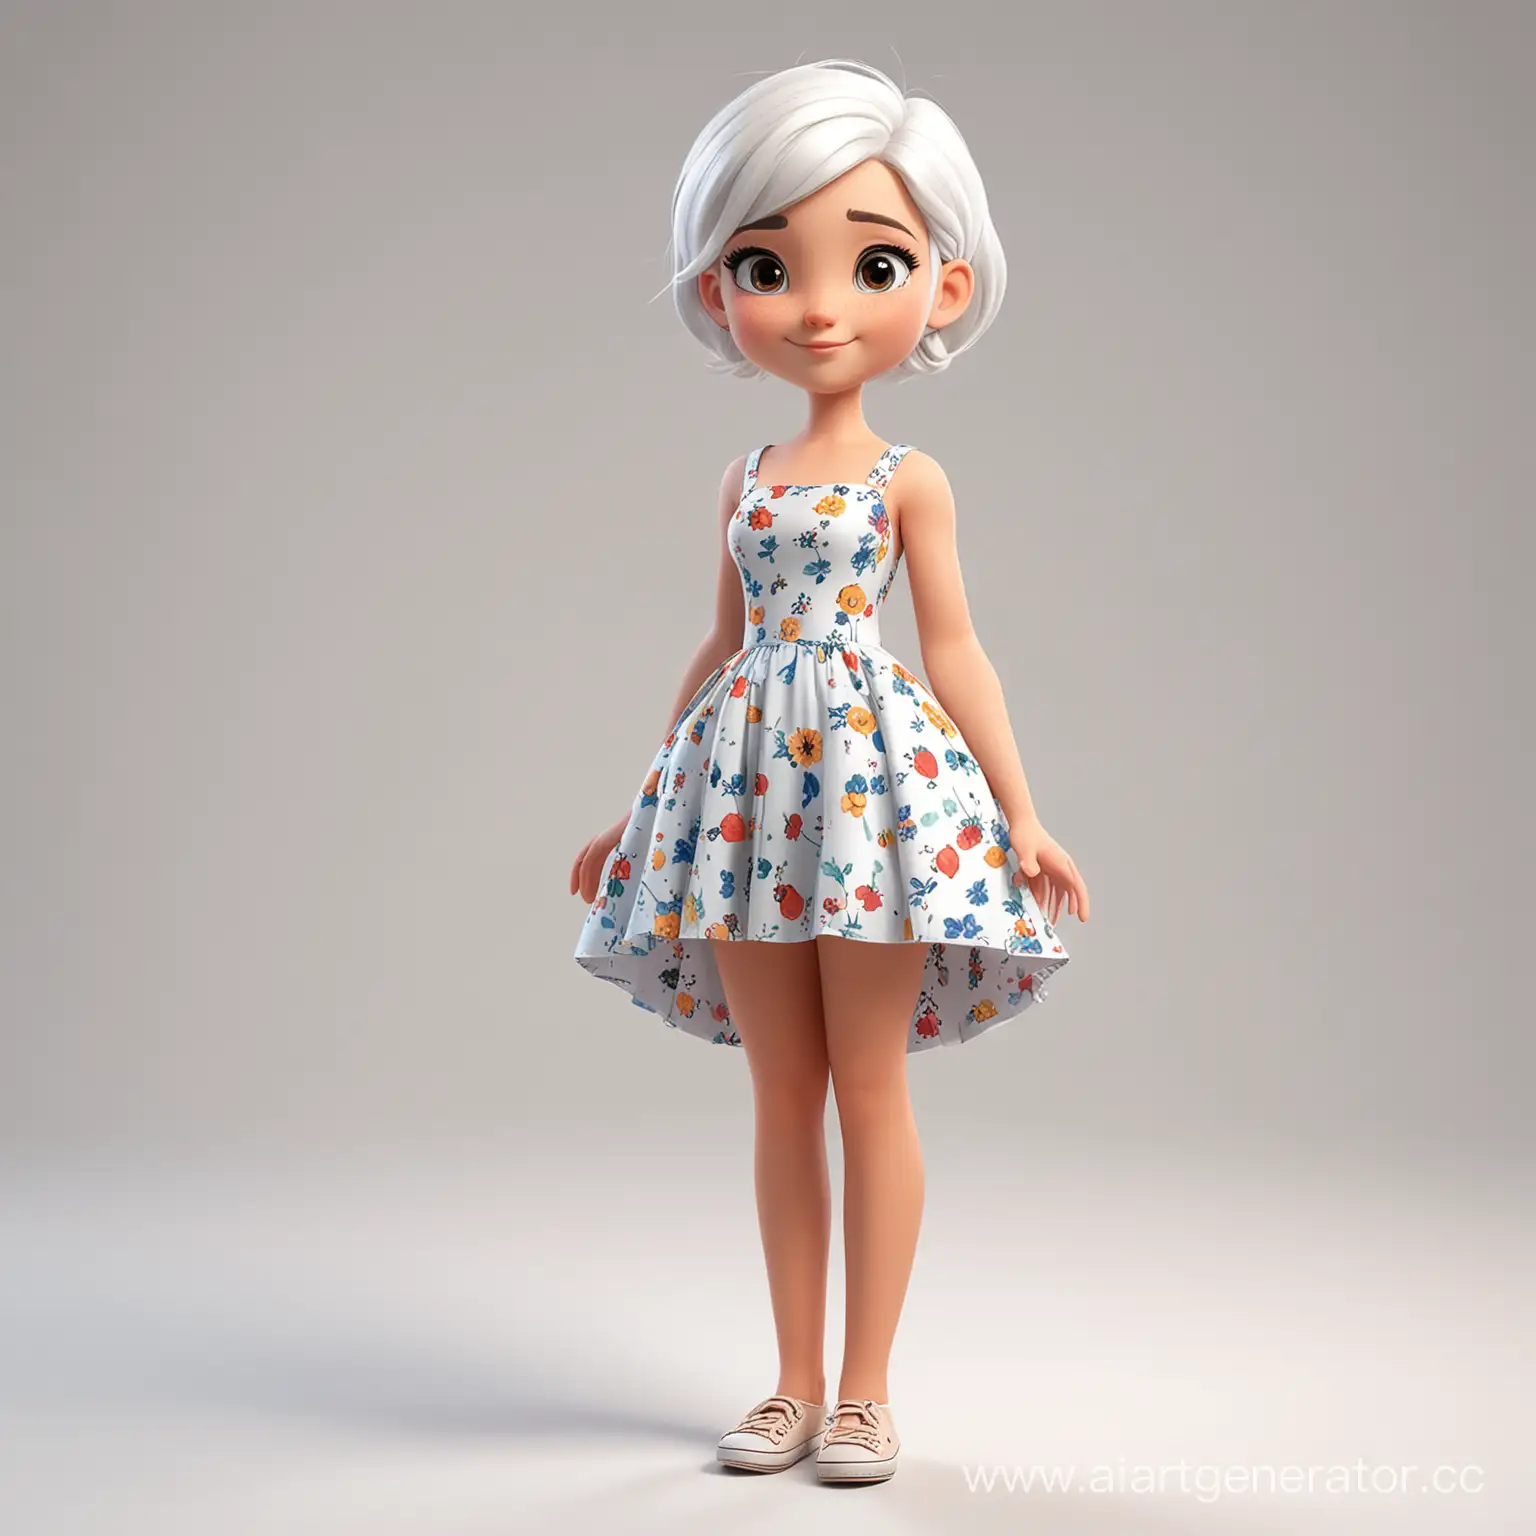 Cartoon-Girl-in-Upward-CartoonStyle-Dress-on-White-Background